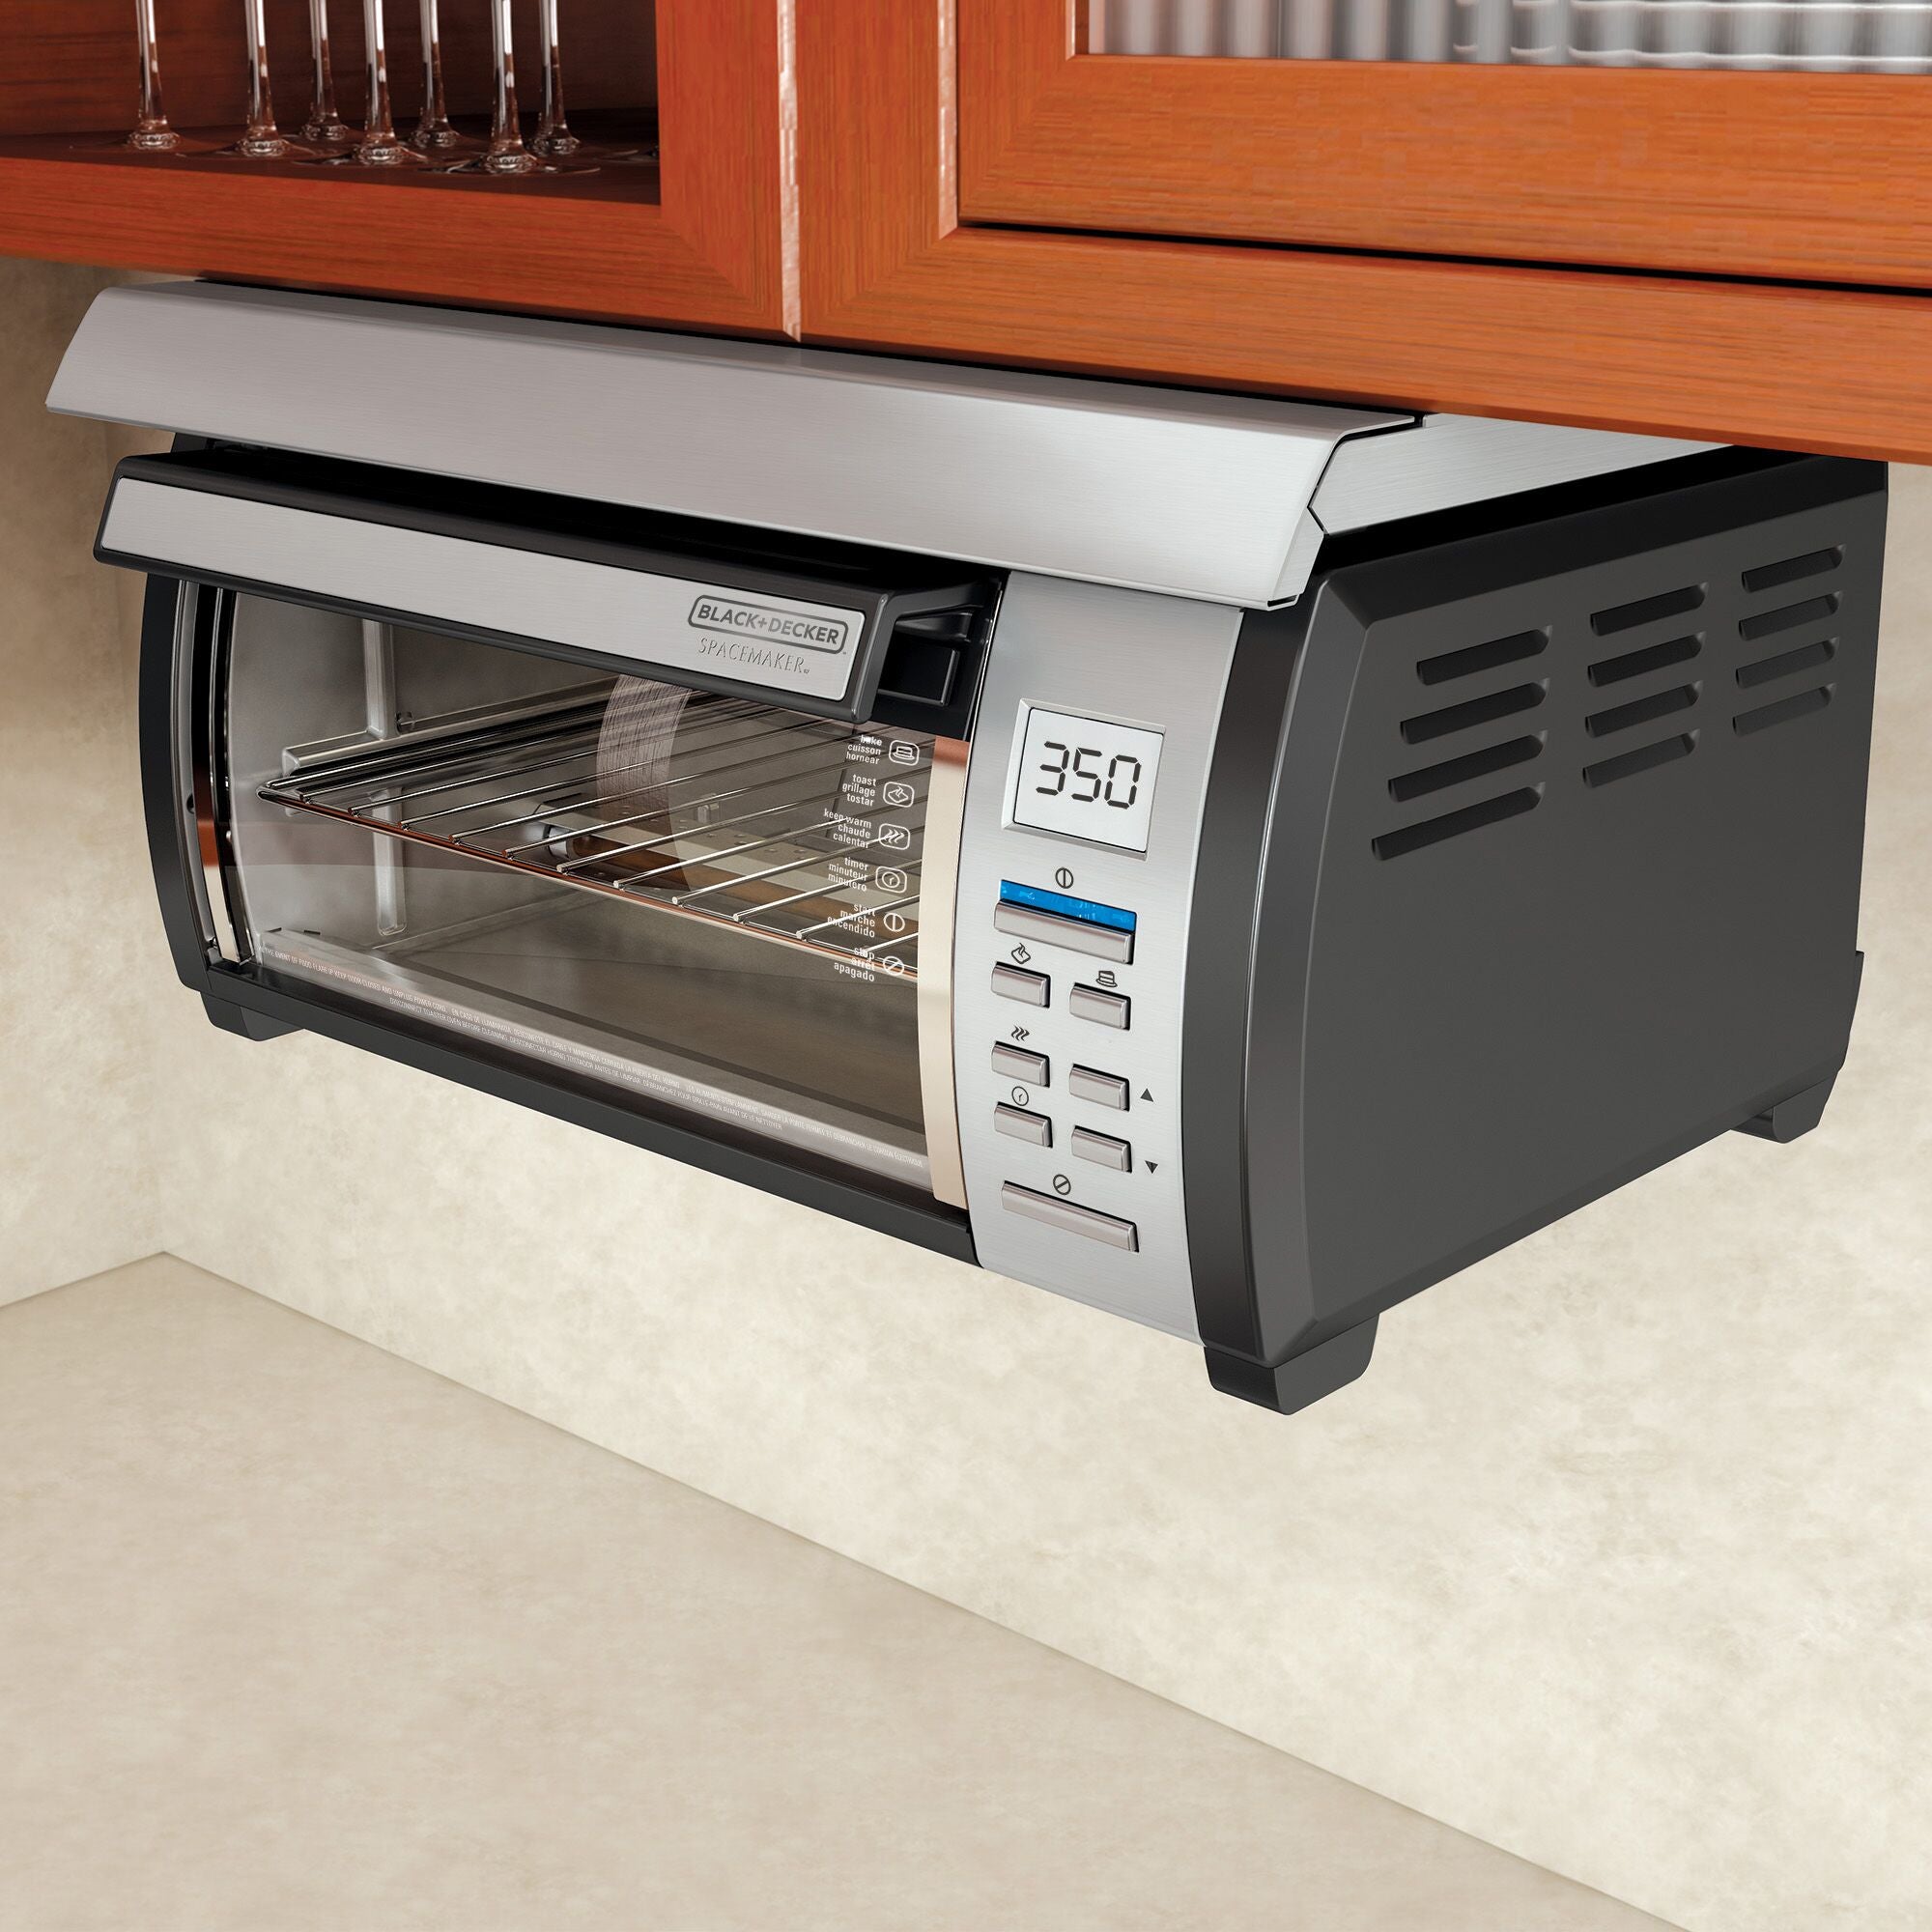 4 Slice Toaster Oven